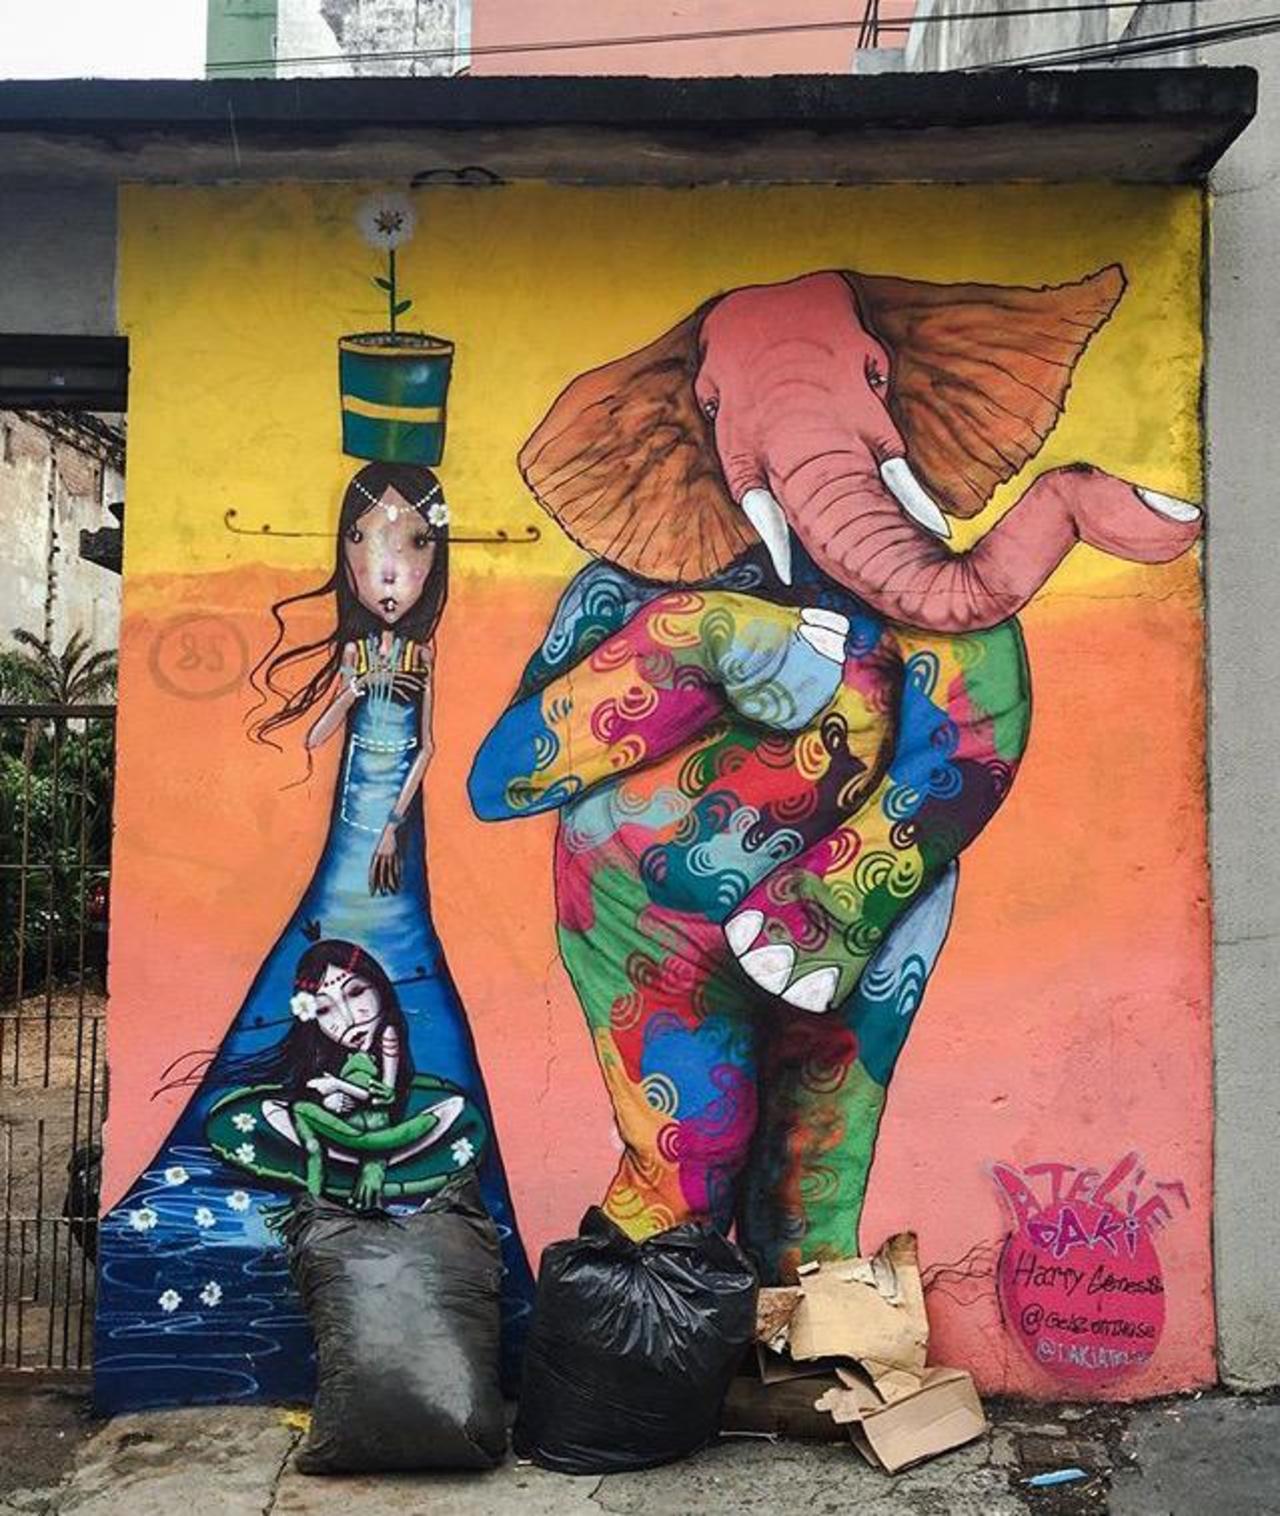 Street Art by Harry Geneis & Gelson in São Paulo 

#art #mural #graffiti #streetart http://t.co/e2SpK1wvJT